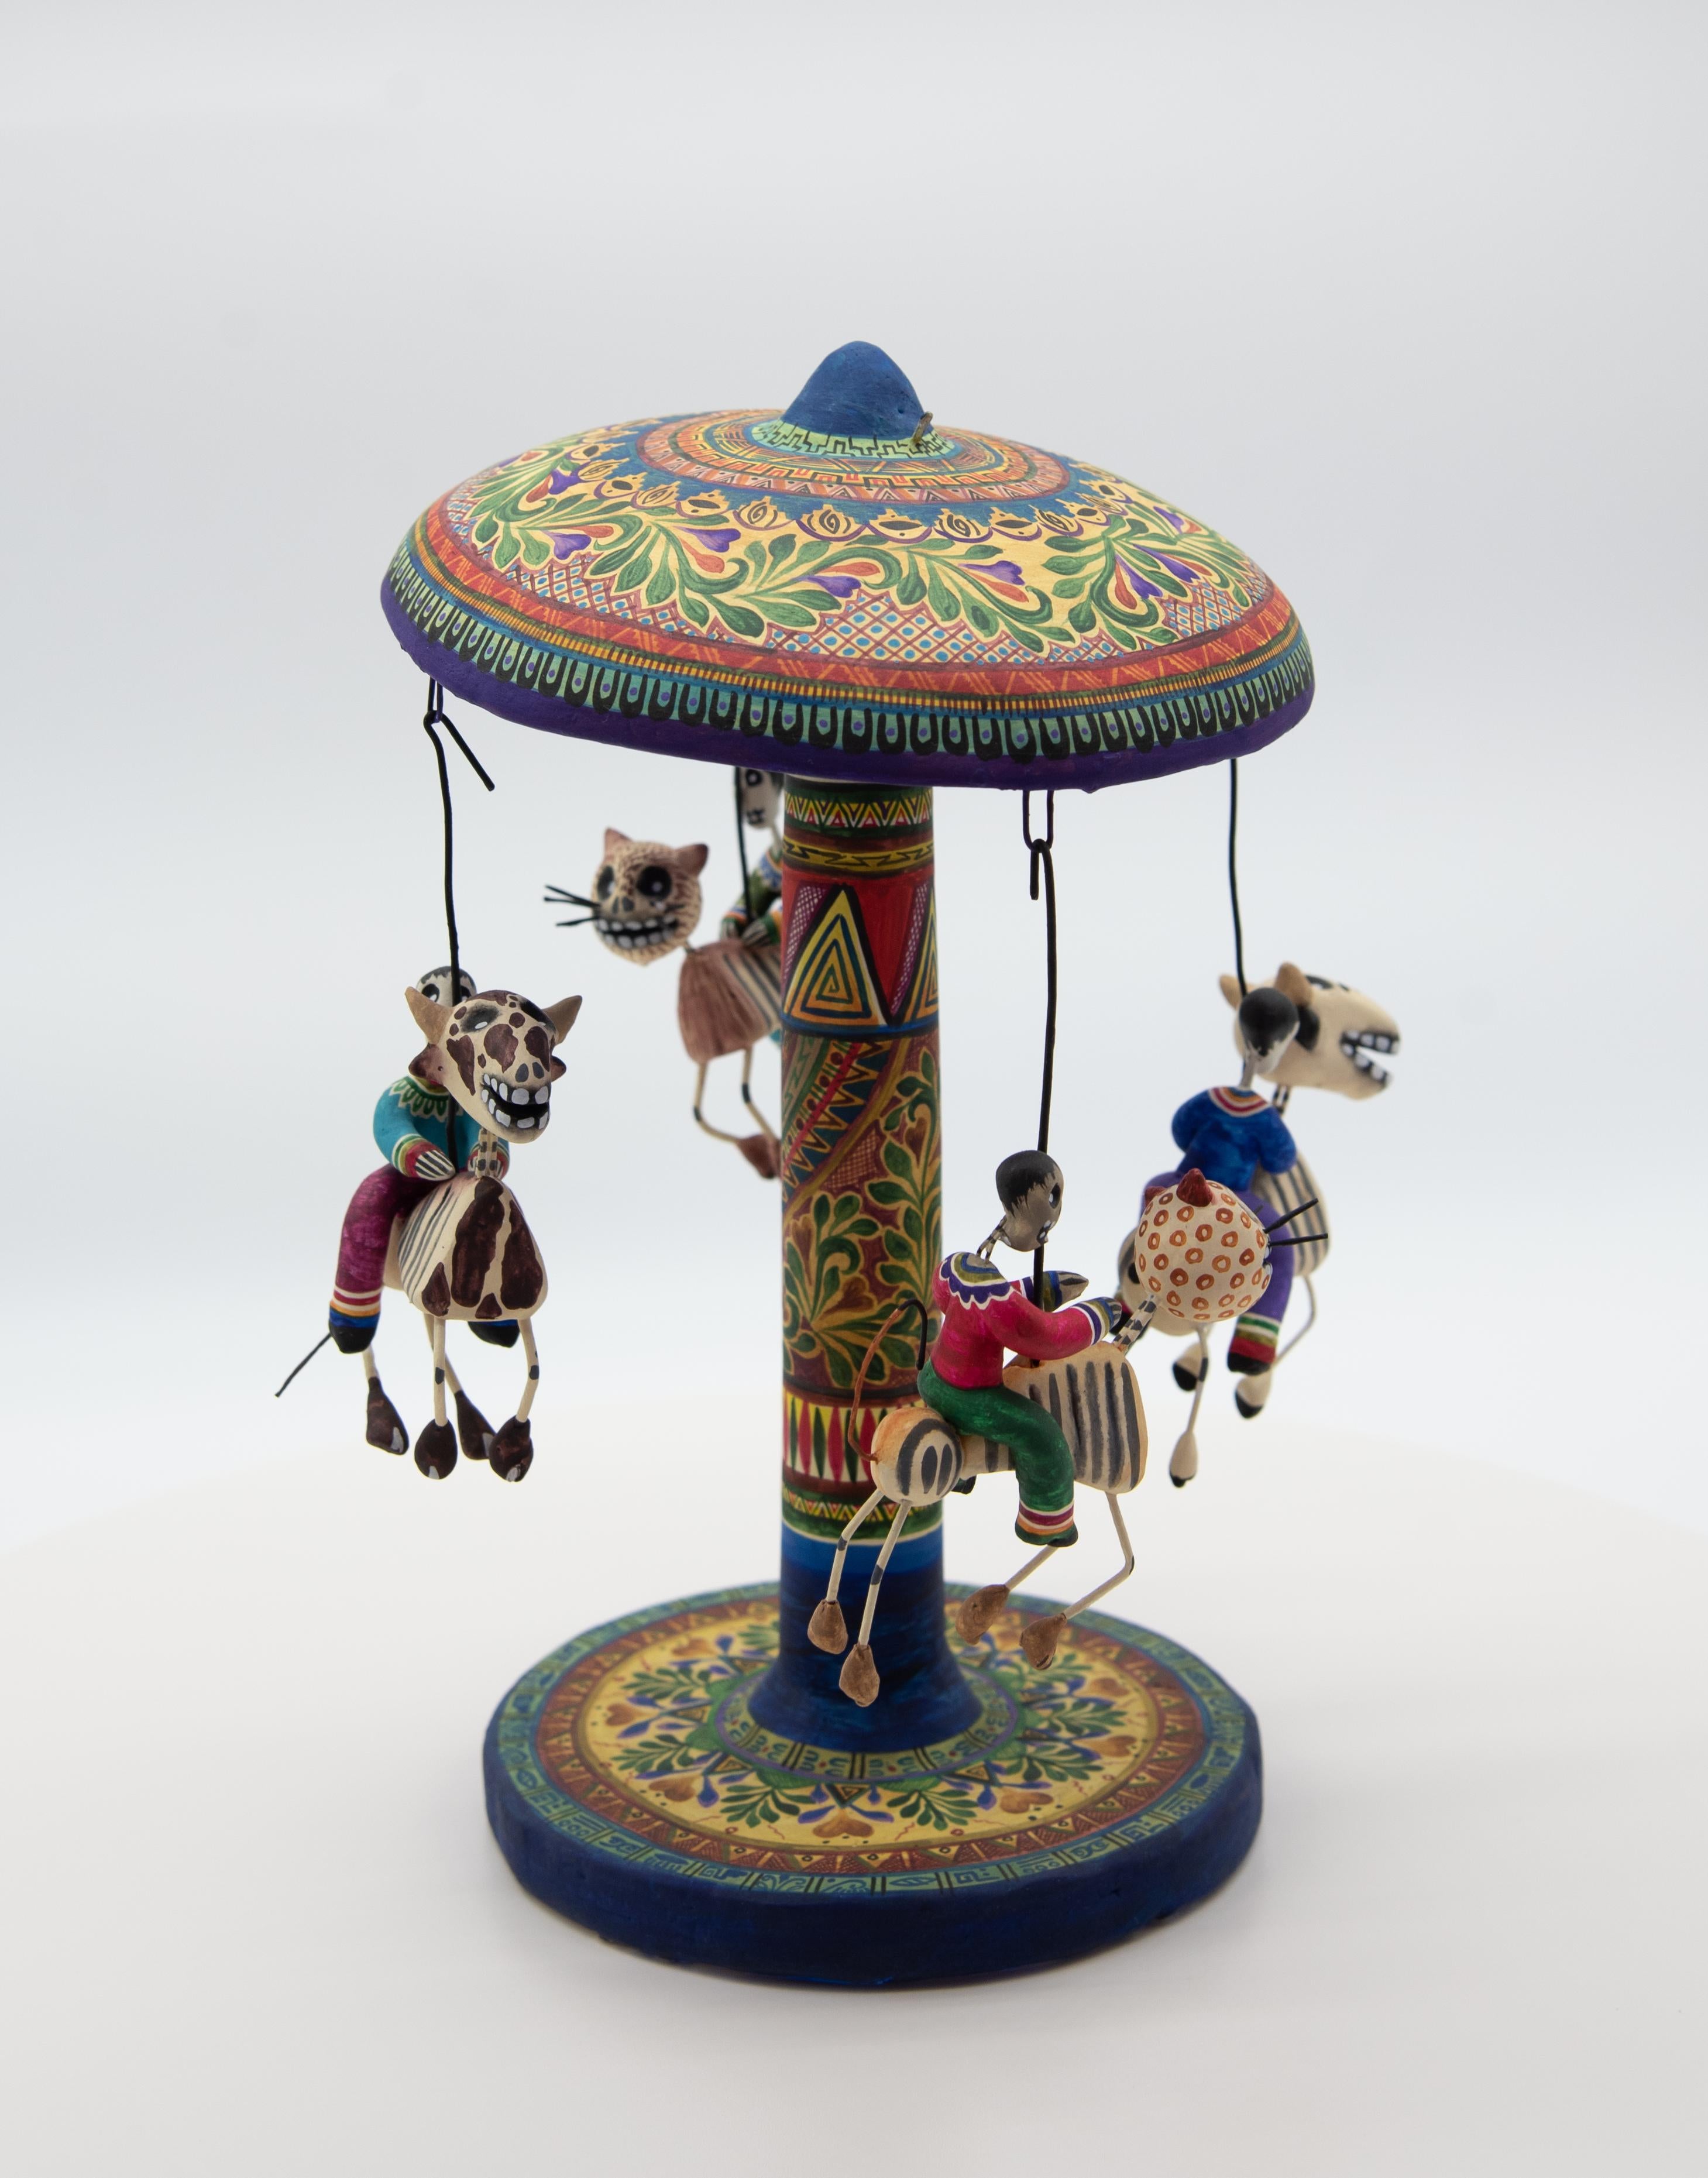 Carousel Day of the Dead Ceramic Mexican Folk Art by Familia Castillo  For Sale 4